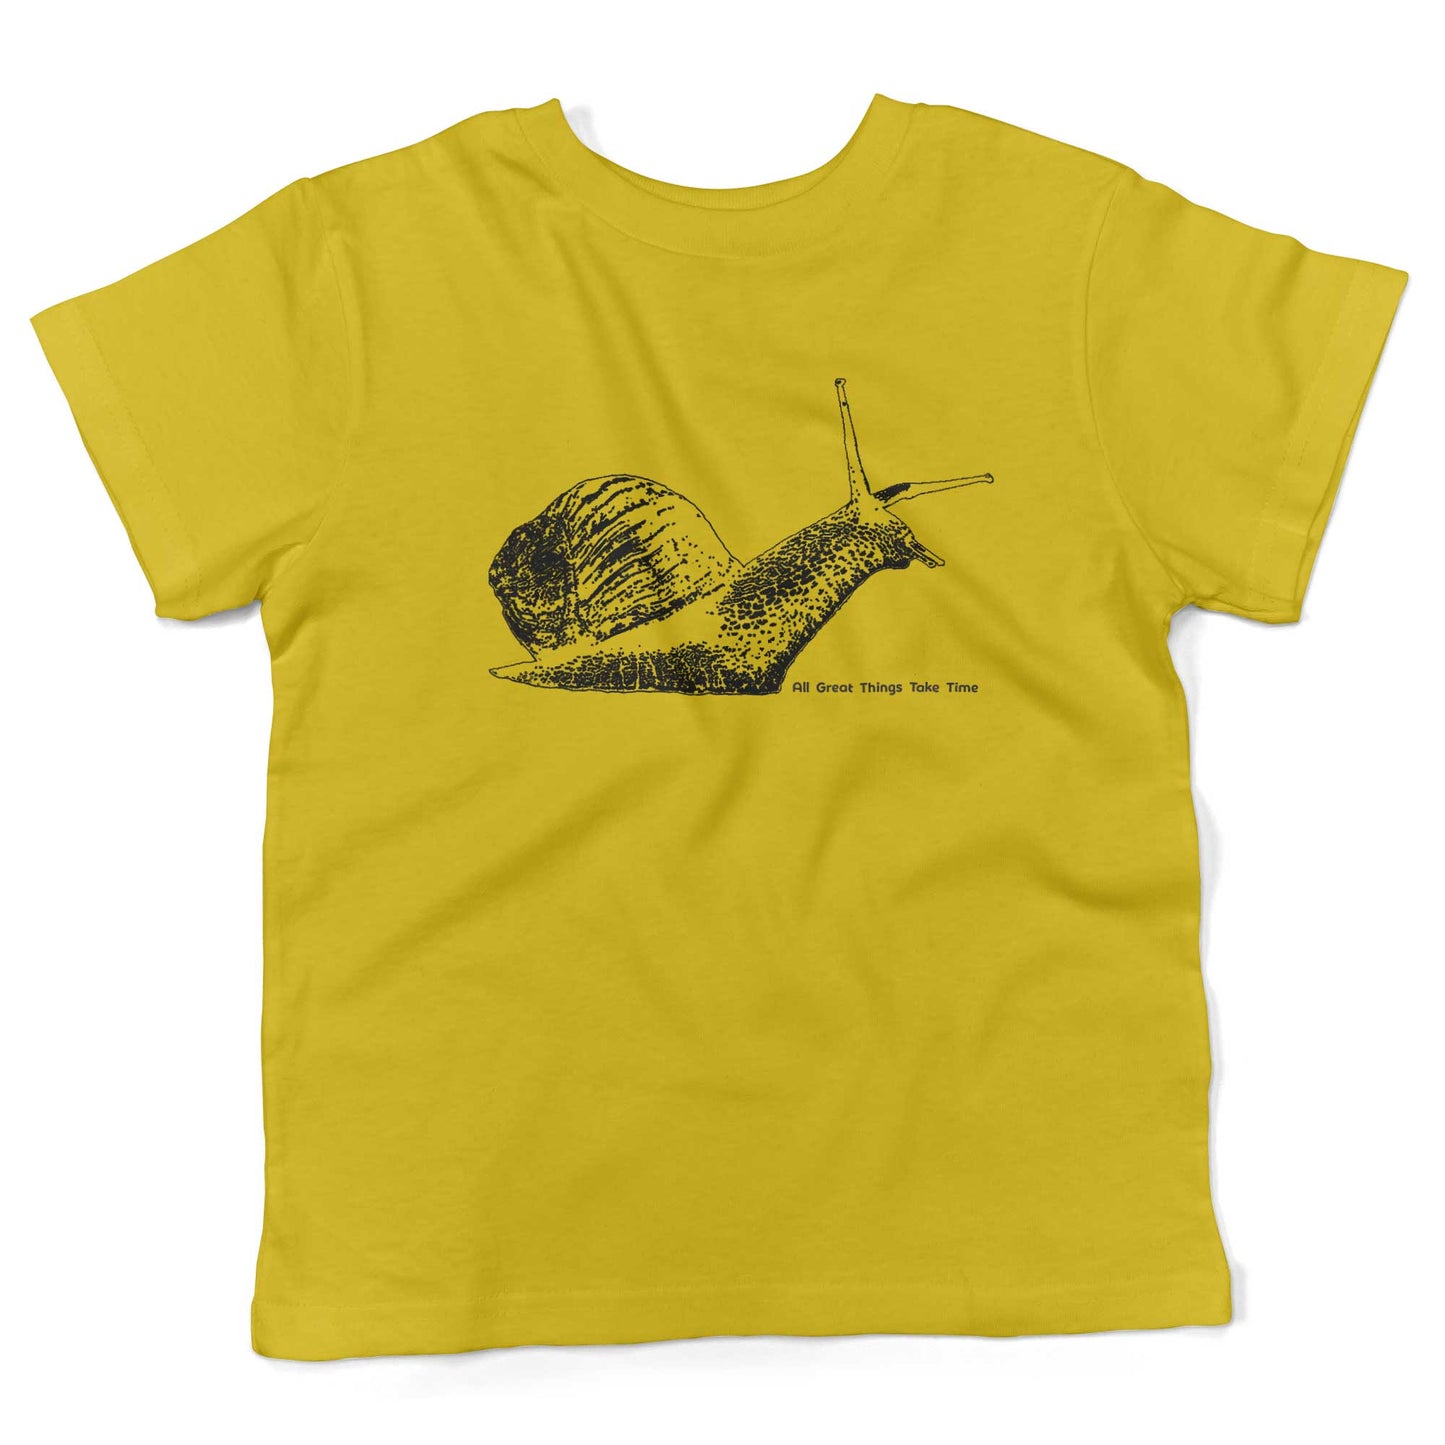 All Great Things Take Time Toddler Shirt-Sunshine Yellow-2T